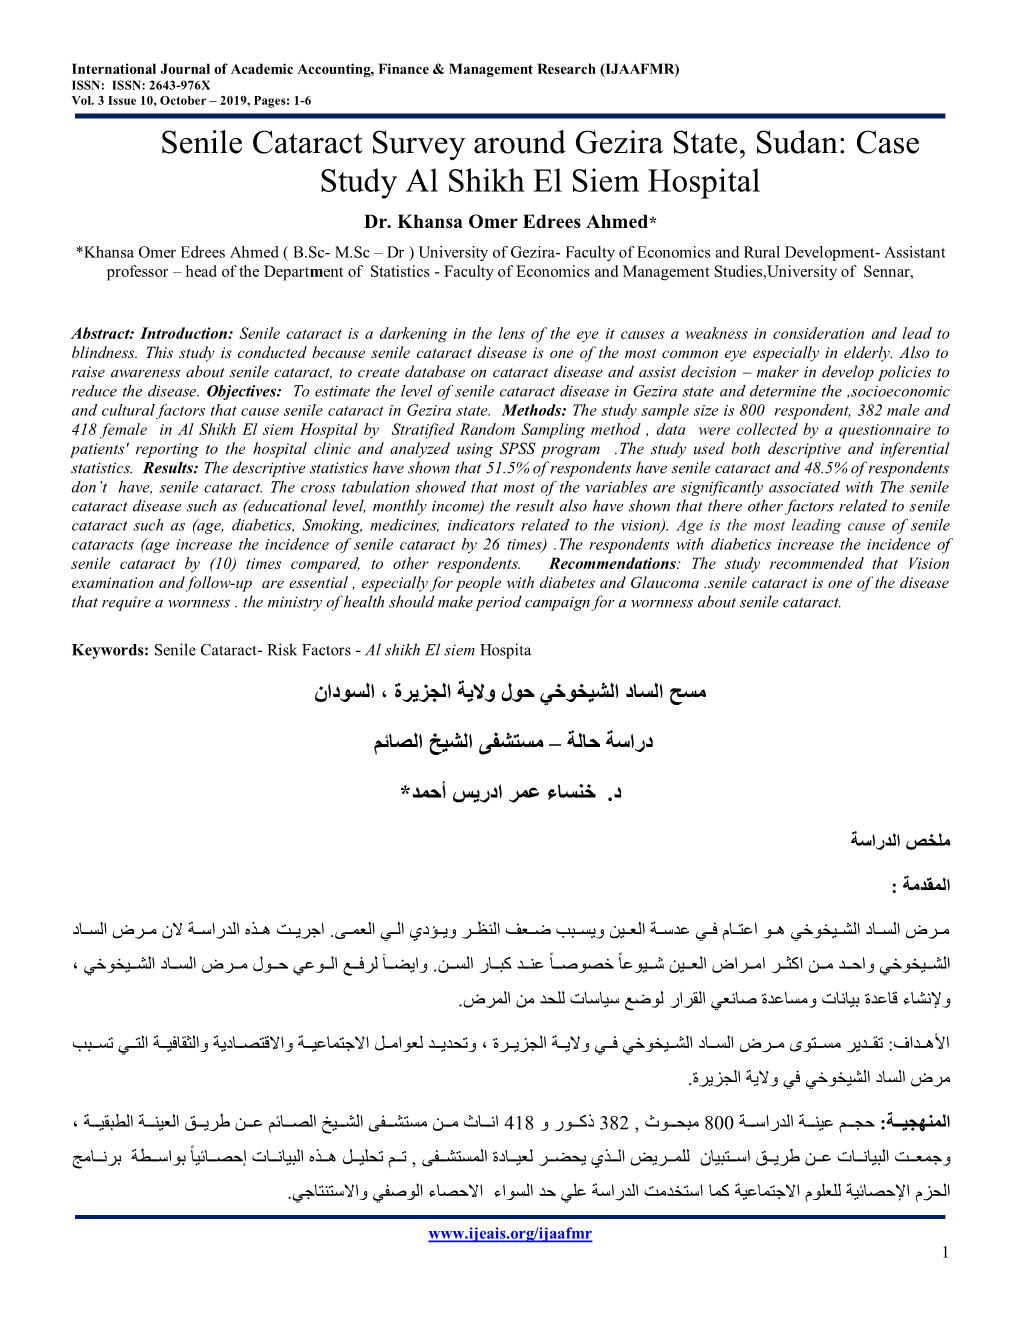 Senile Cataract Survey Around Gezira State, Sudan: Case Study Al Shikh El Siem Hospital Dr